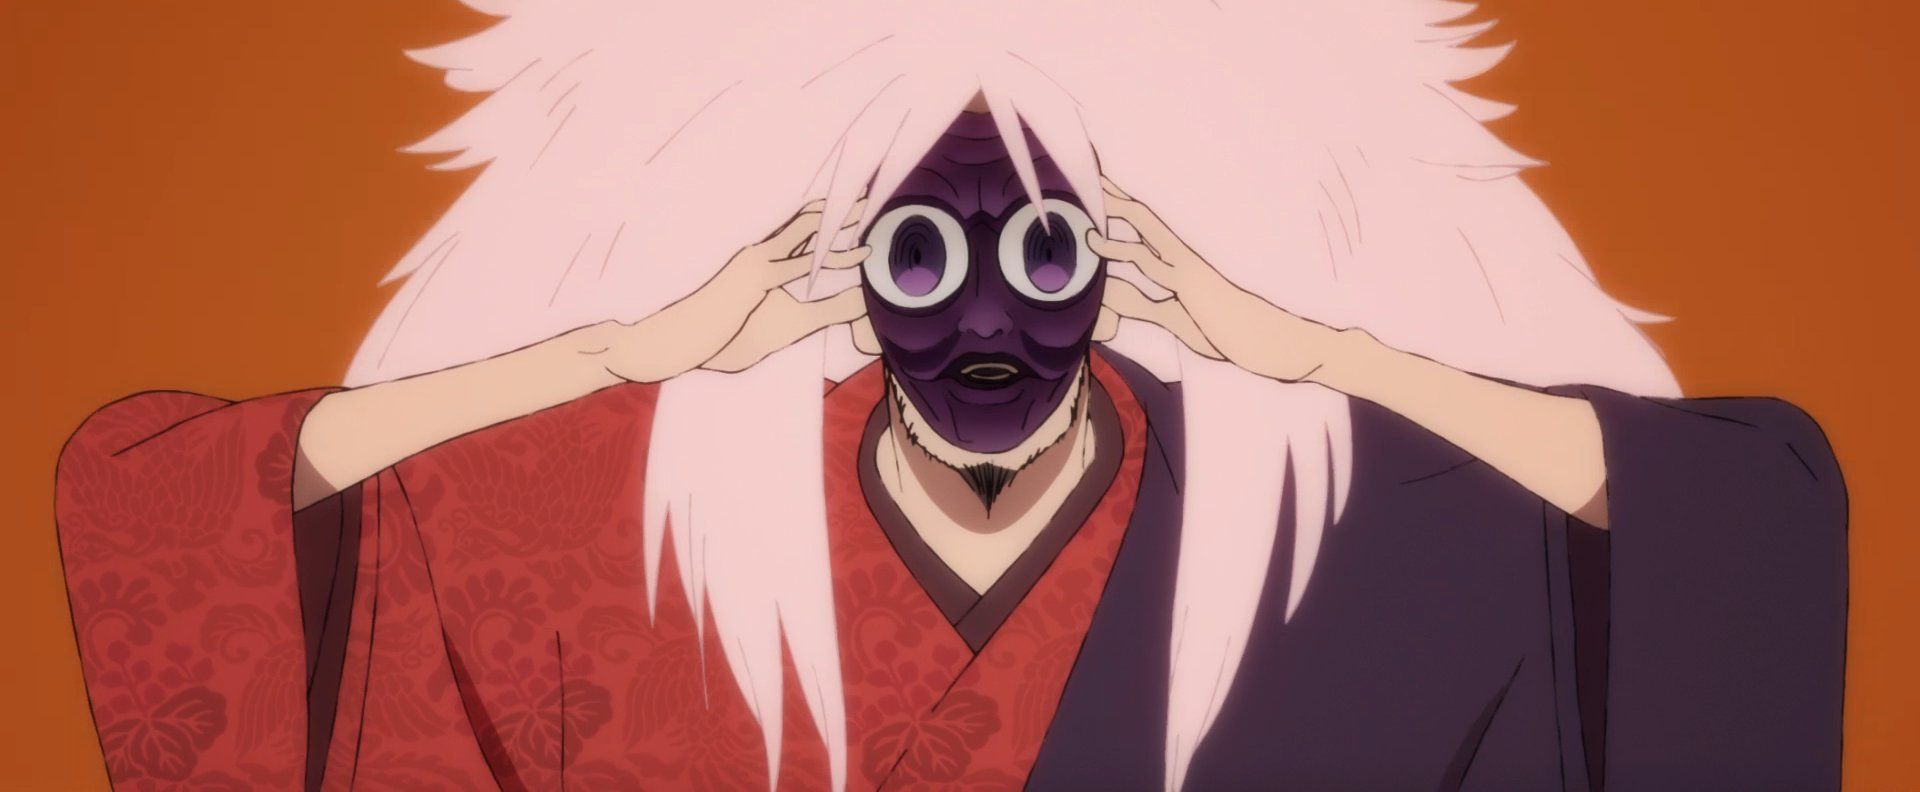 Inu-Oh cursed mask